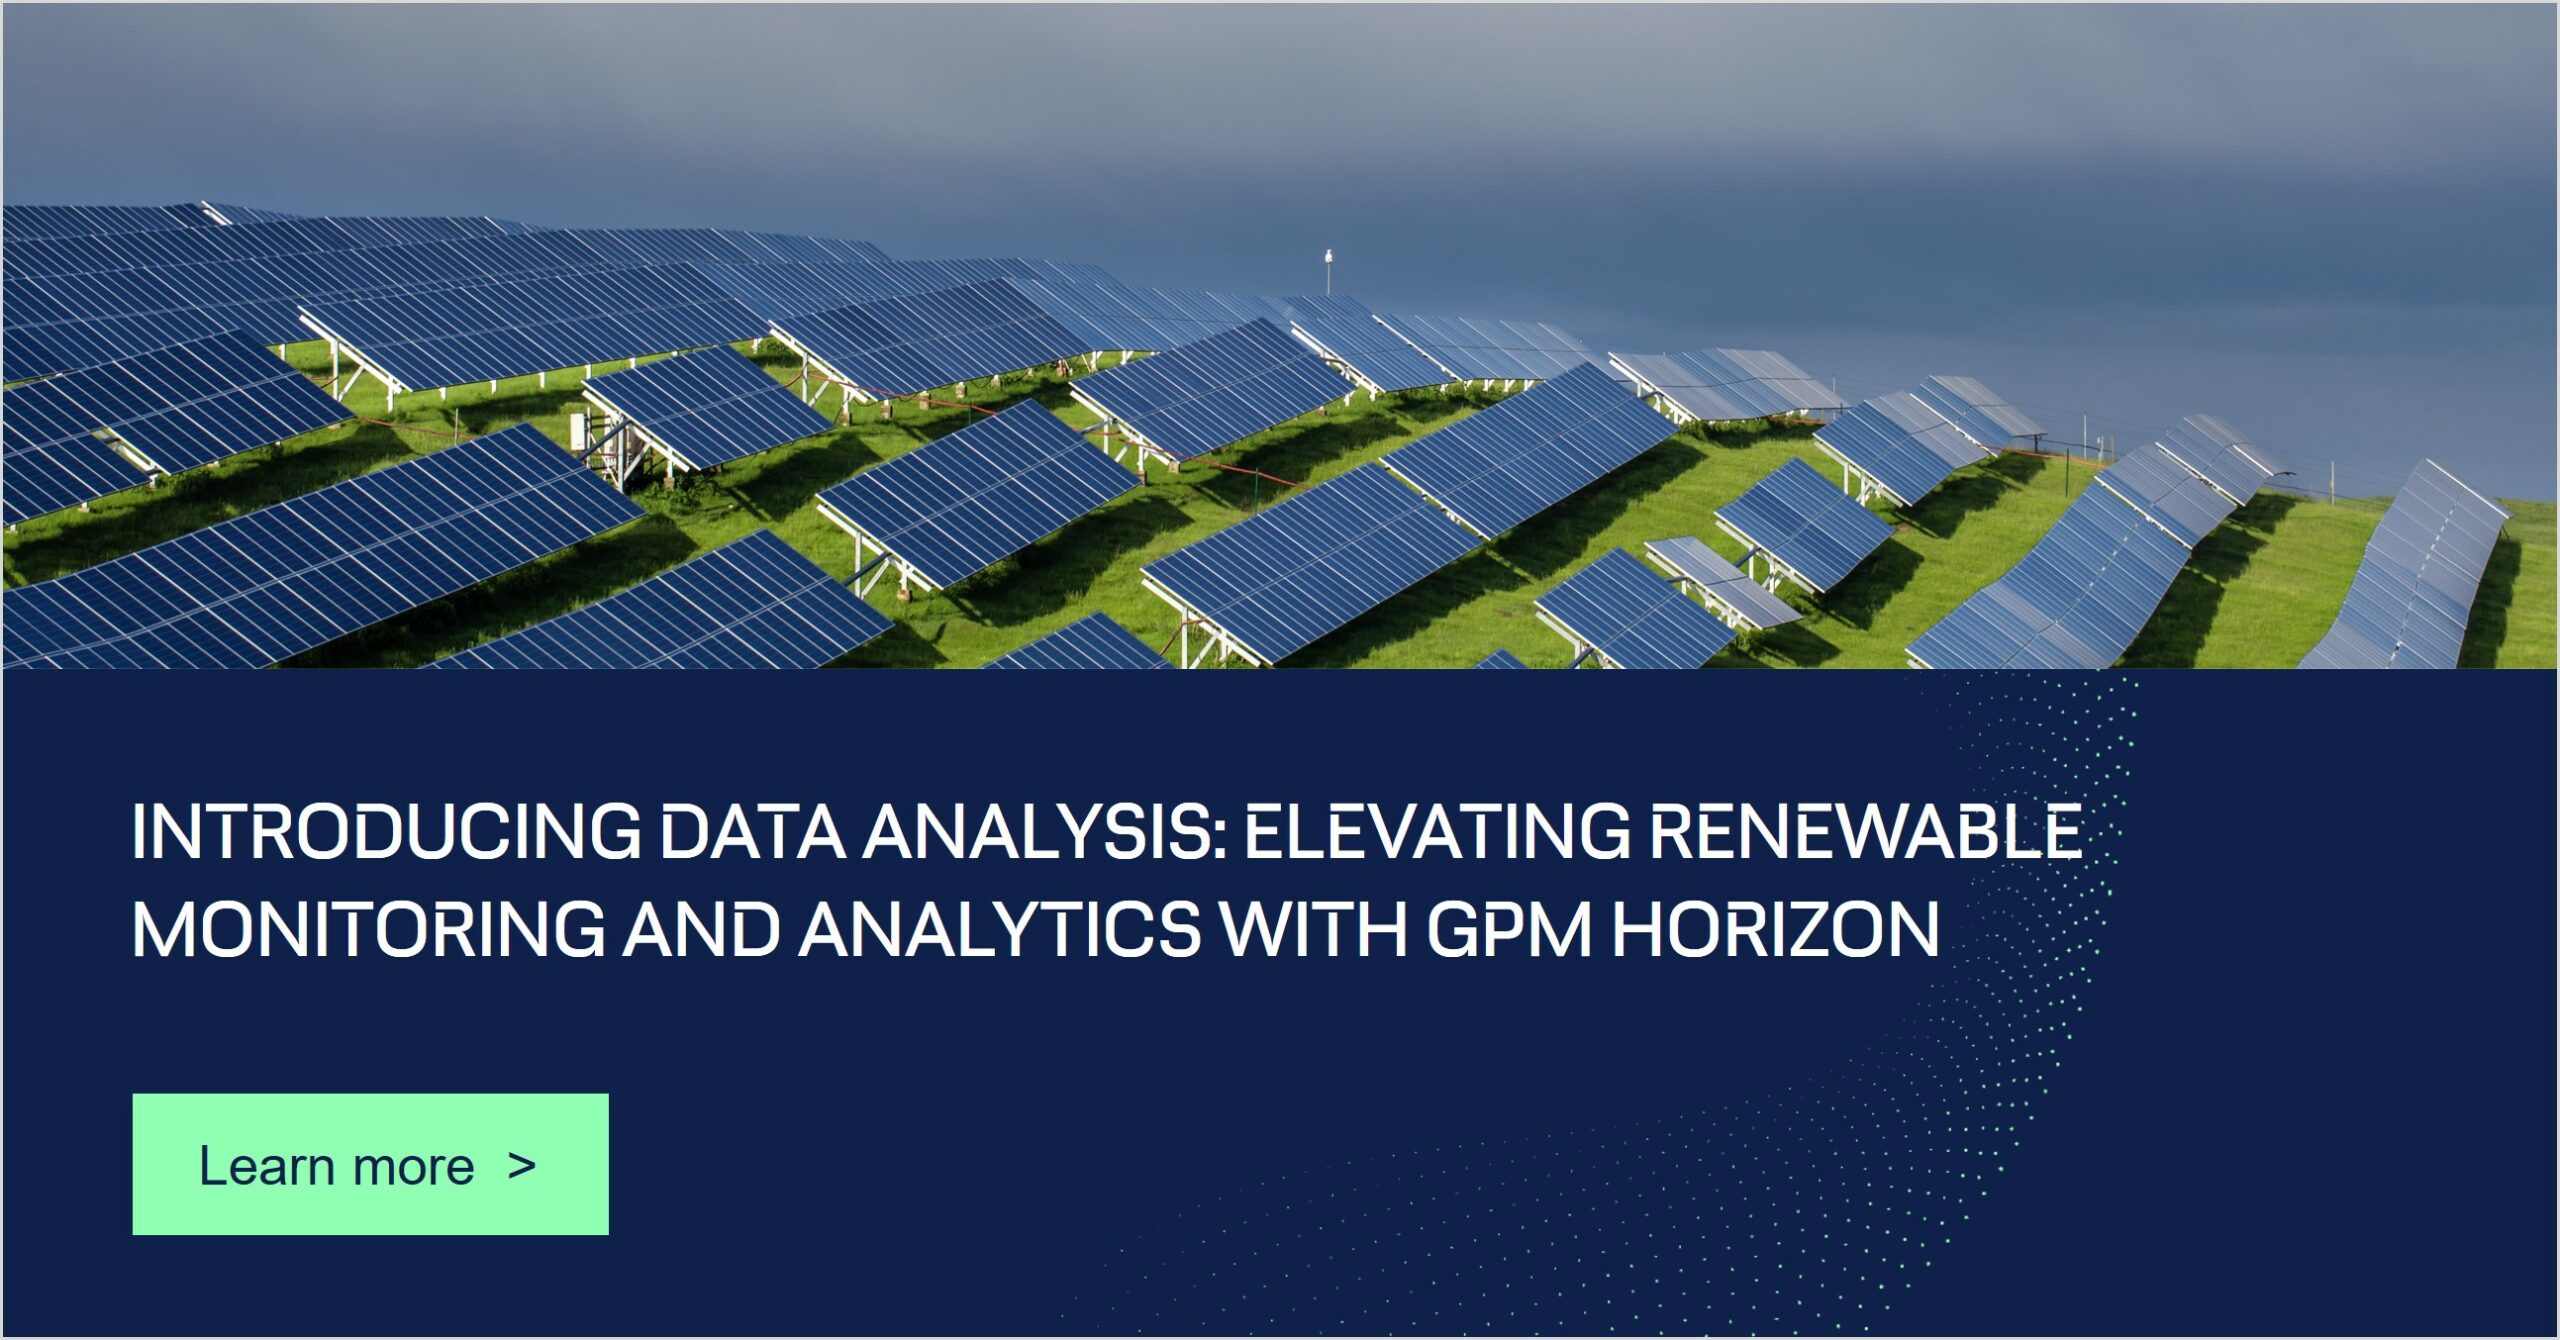 Introducing Data Analytics in GPM Horizon for renewable monitoring